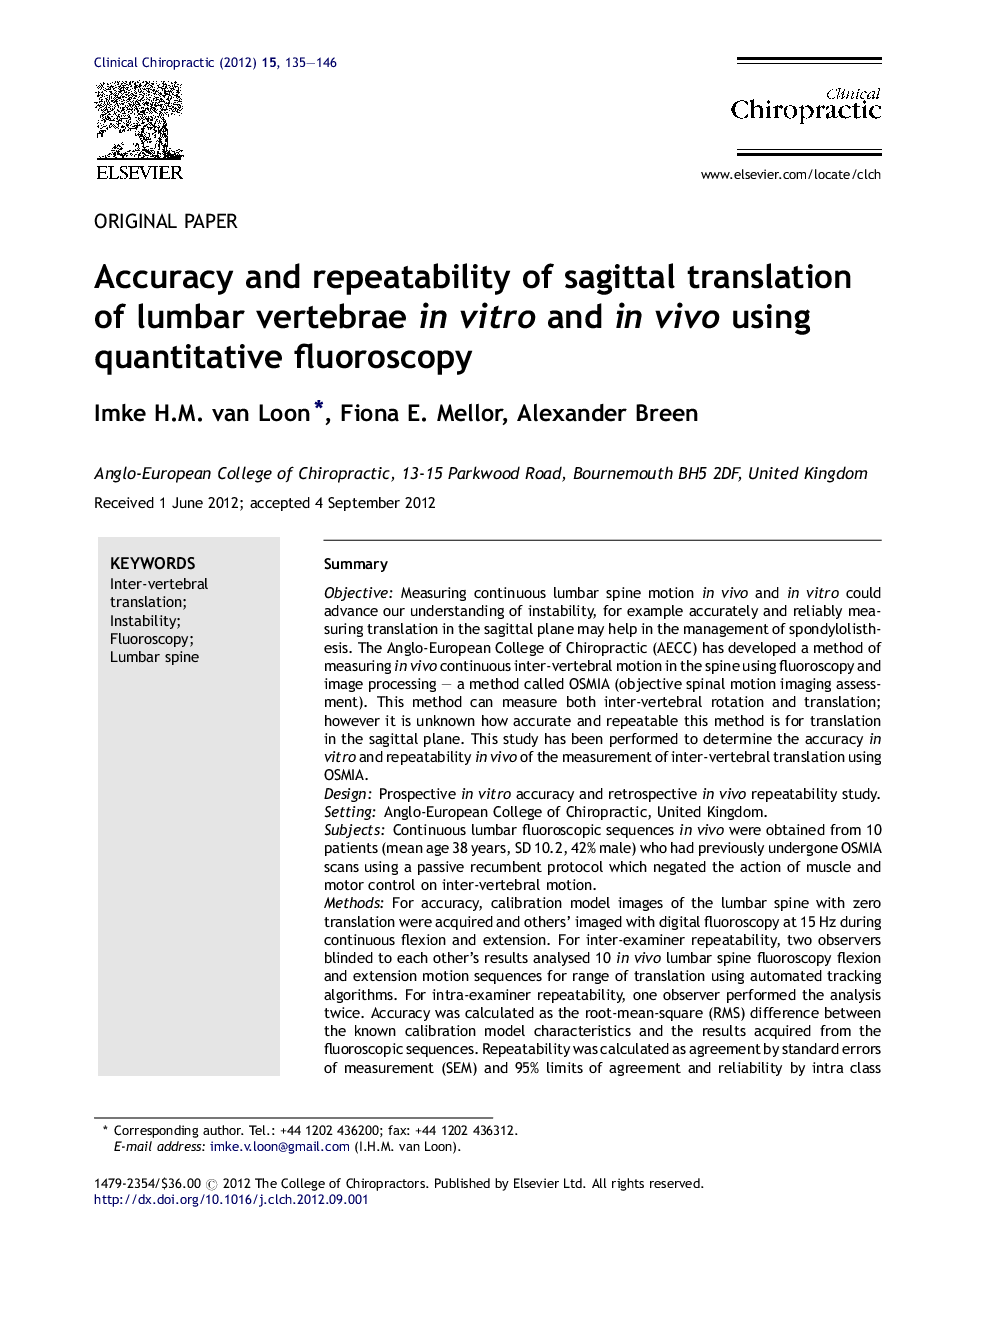 Accuracy and repeatability of sagittal translation of lumbar vertebrae in vitro and in vivo using quantitative fluoroscopy